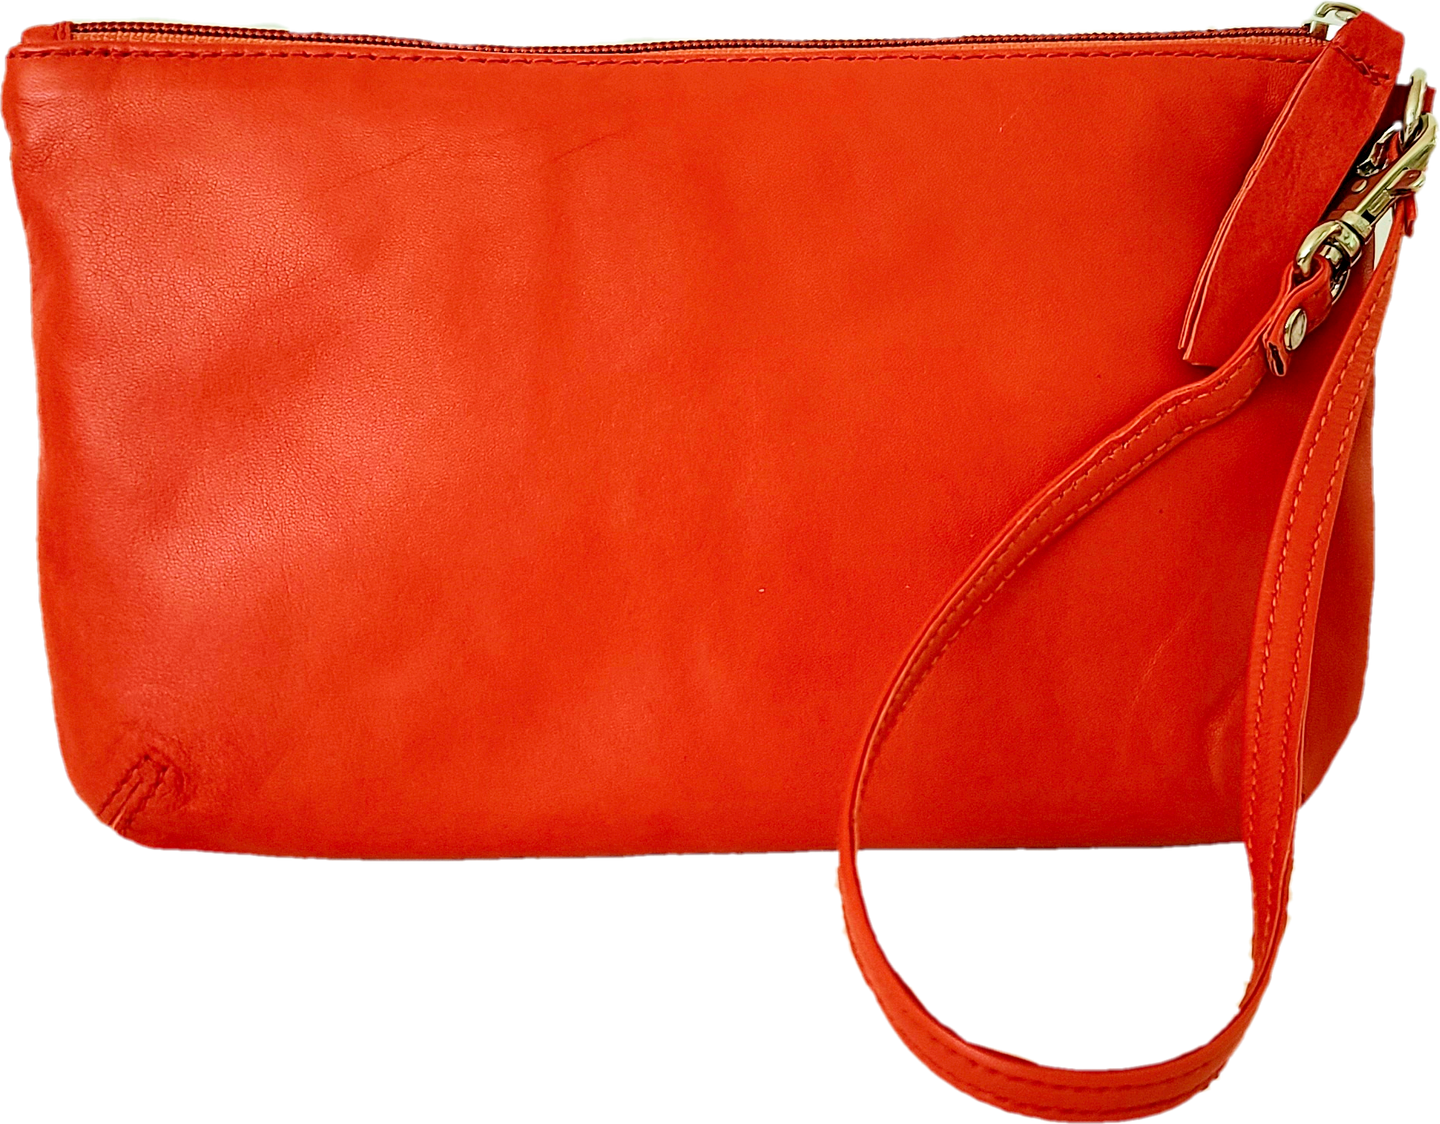 Orange leather pouch